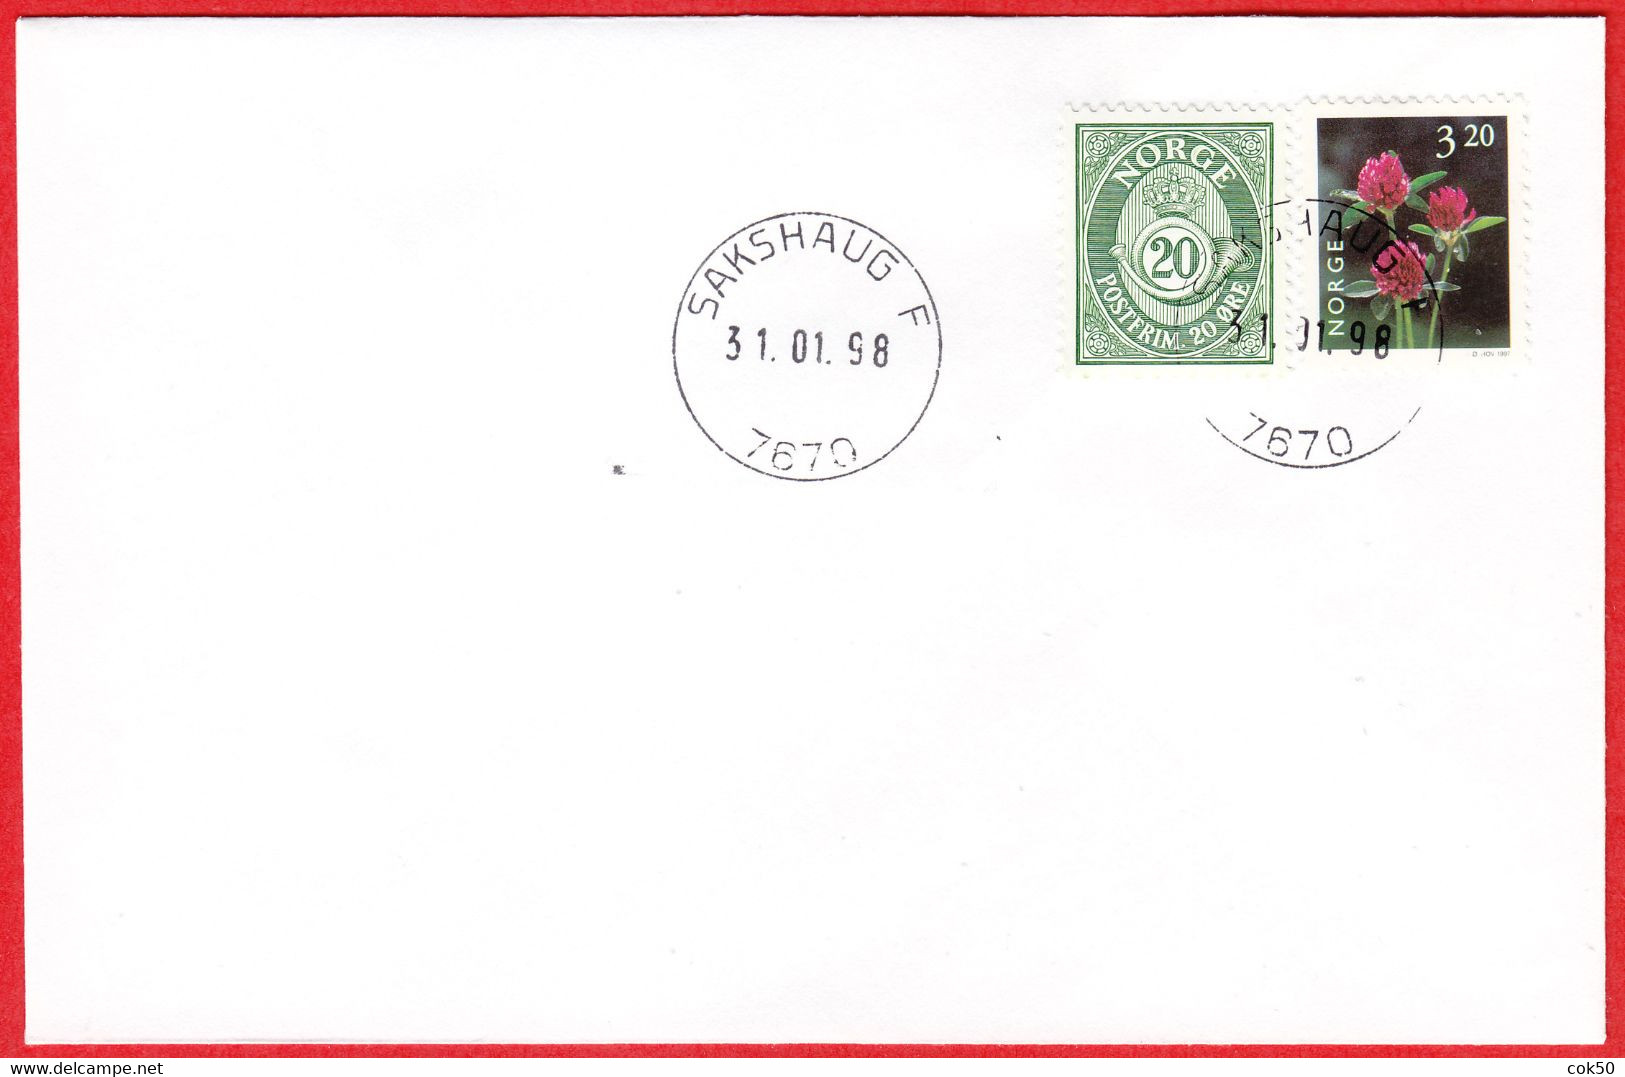 NORWAY -  7670 SAKSHAUG F (Trøndelag County) - Last Day/postoffice Closed On 1998.01.31 - Local Post Stamps